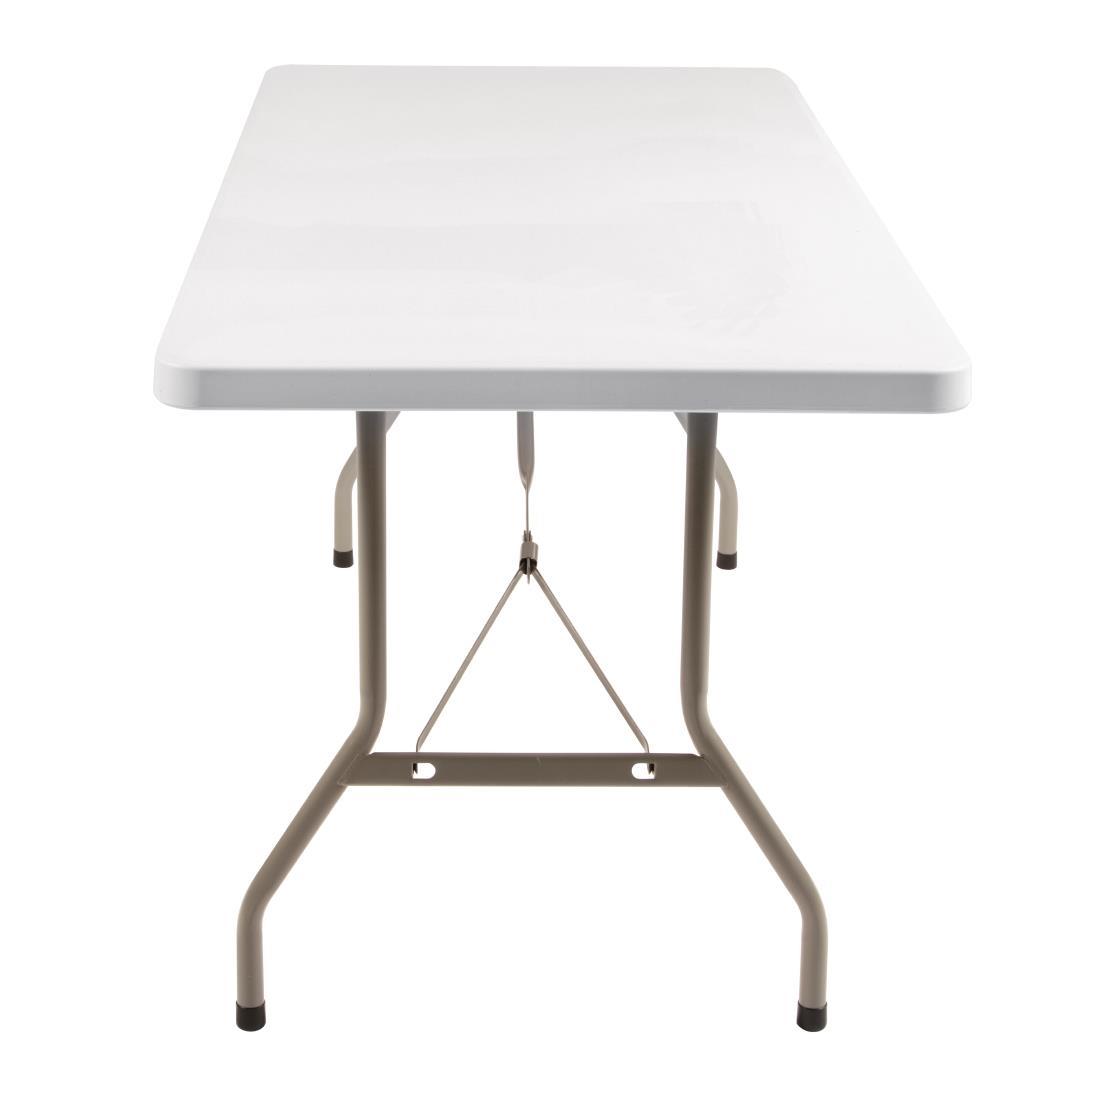 Bolero PE Rectangular Folding Table White 5ft (Single) - U544  - 3